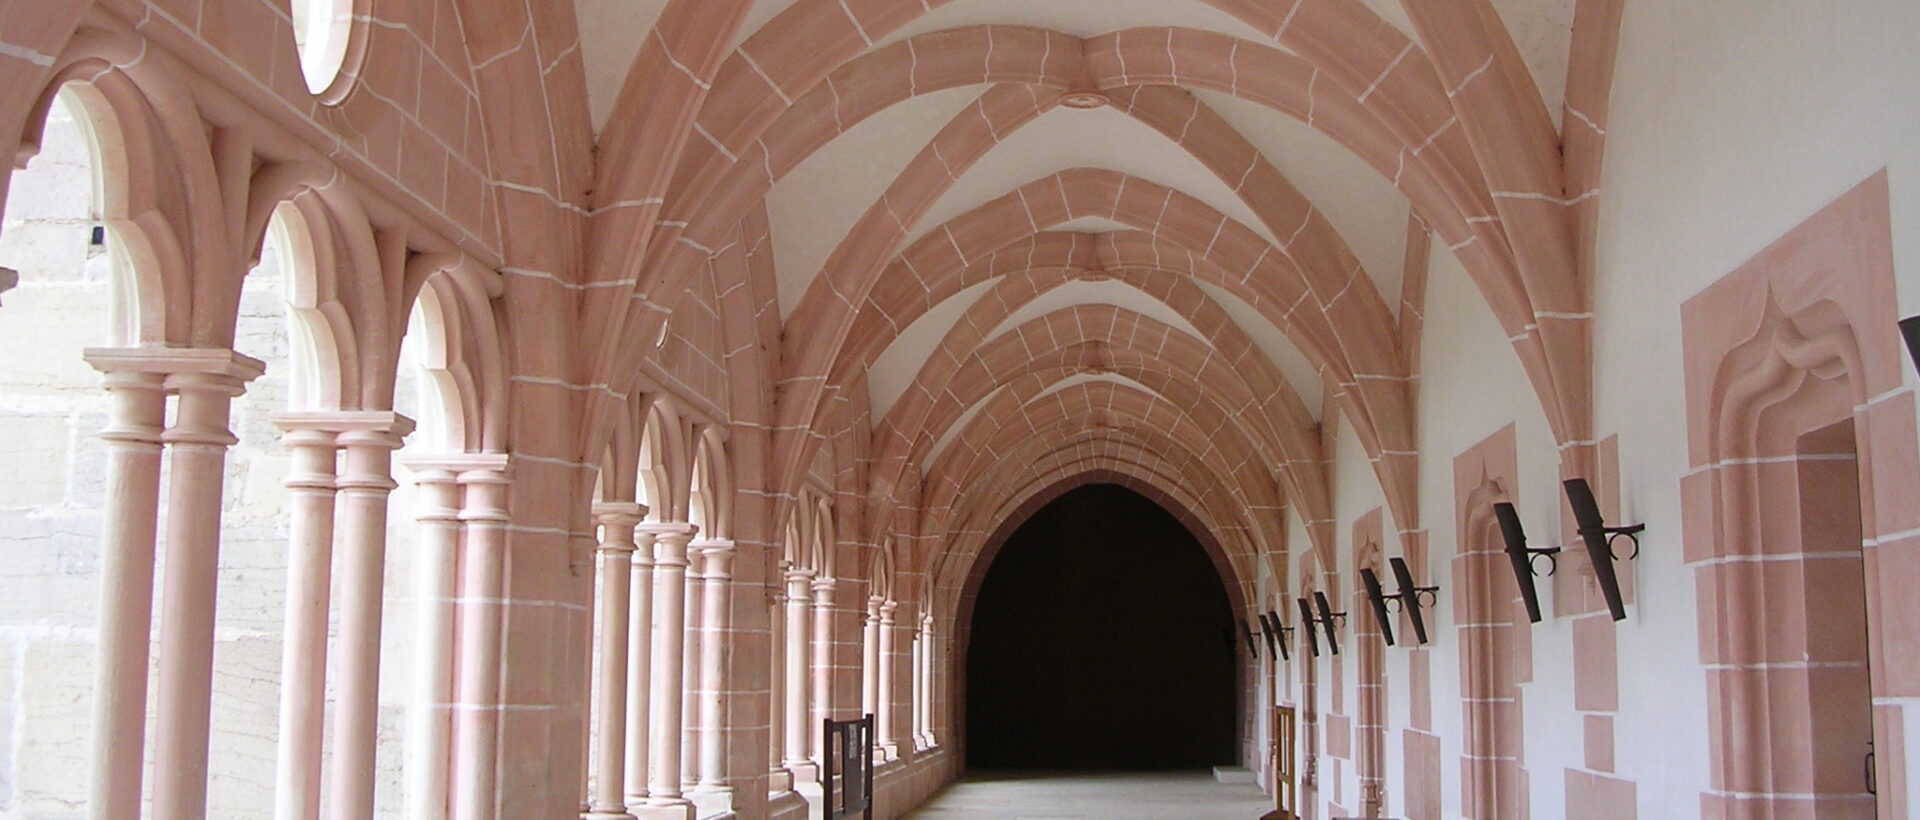 L'abbaye de Cîteaux perpétue sa tradition d'accueil. | Wikimedia Commons/G CHP